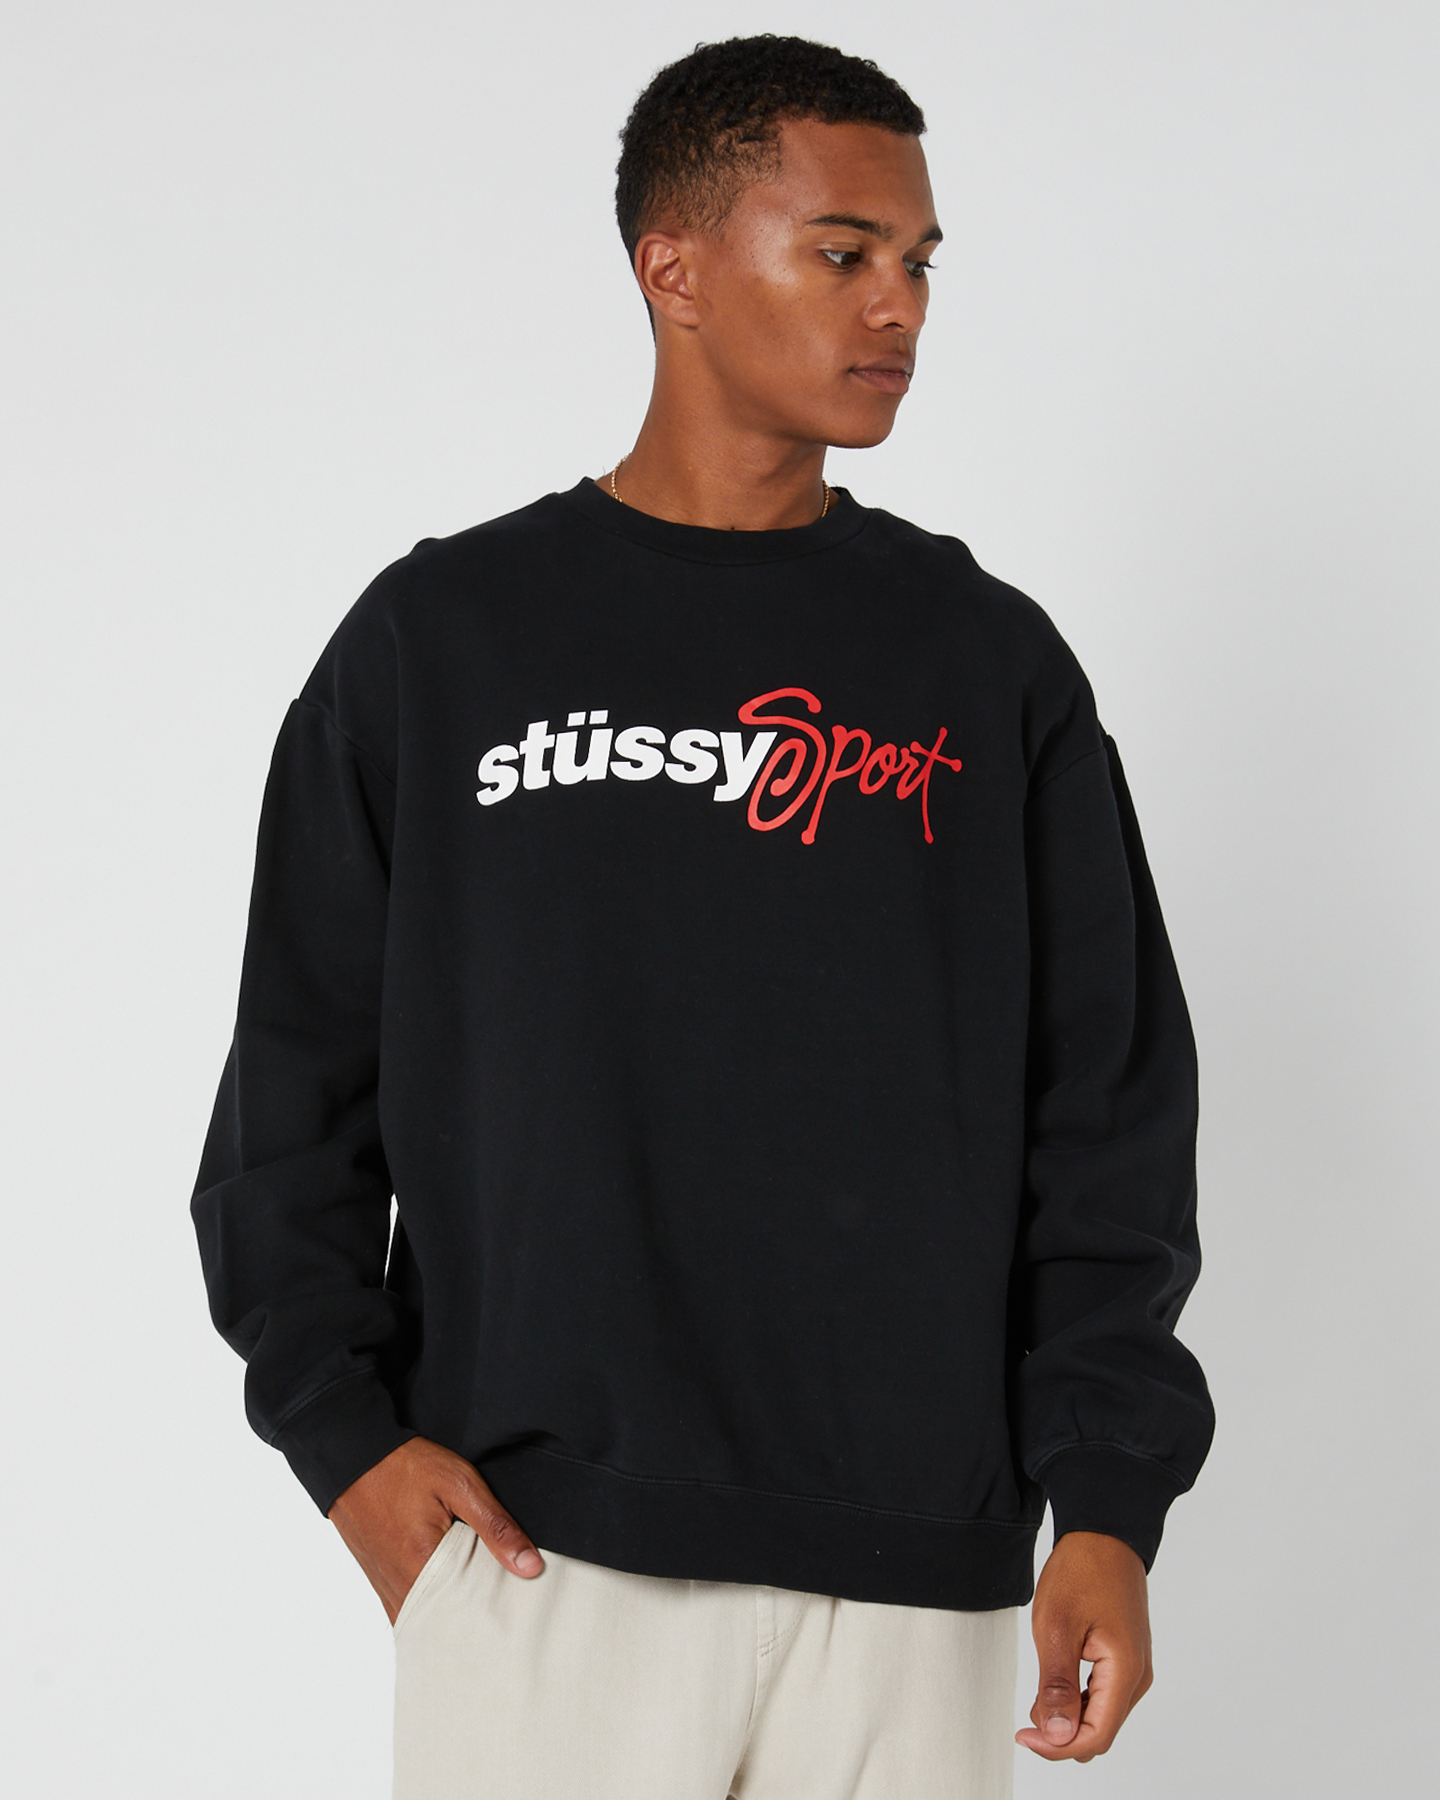 Stussy Stussy Sport 50 50 Crew - Pigment Black | SurfStitch